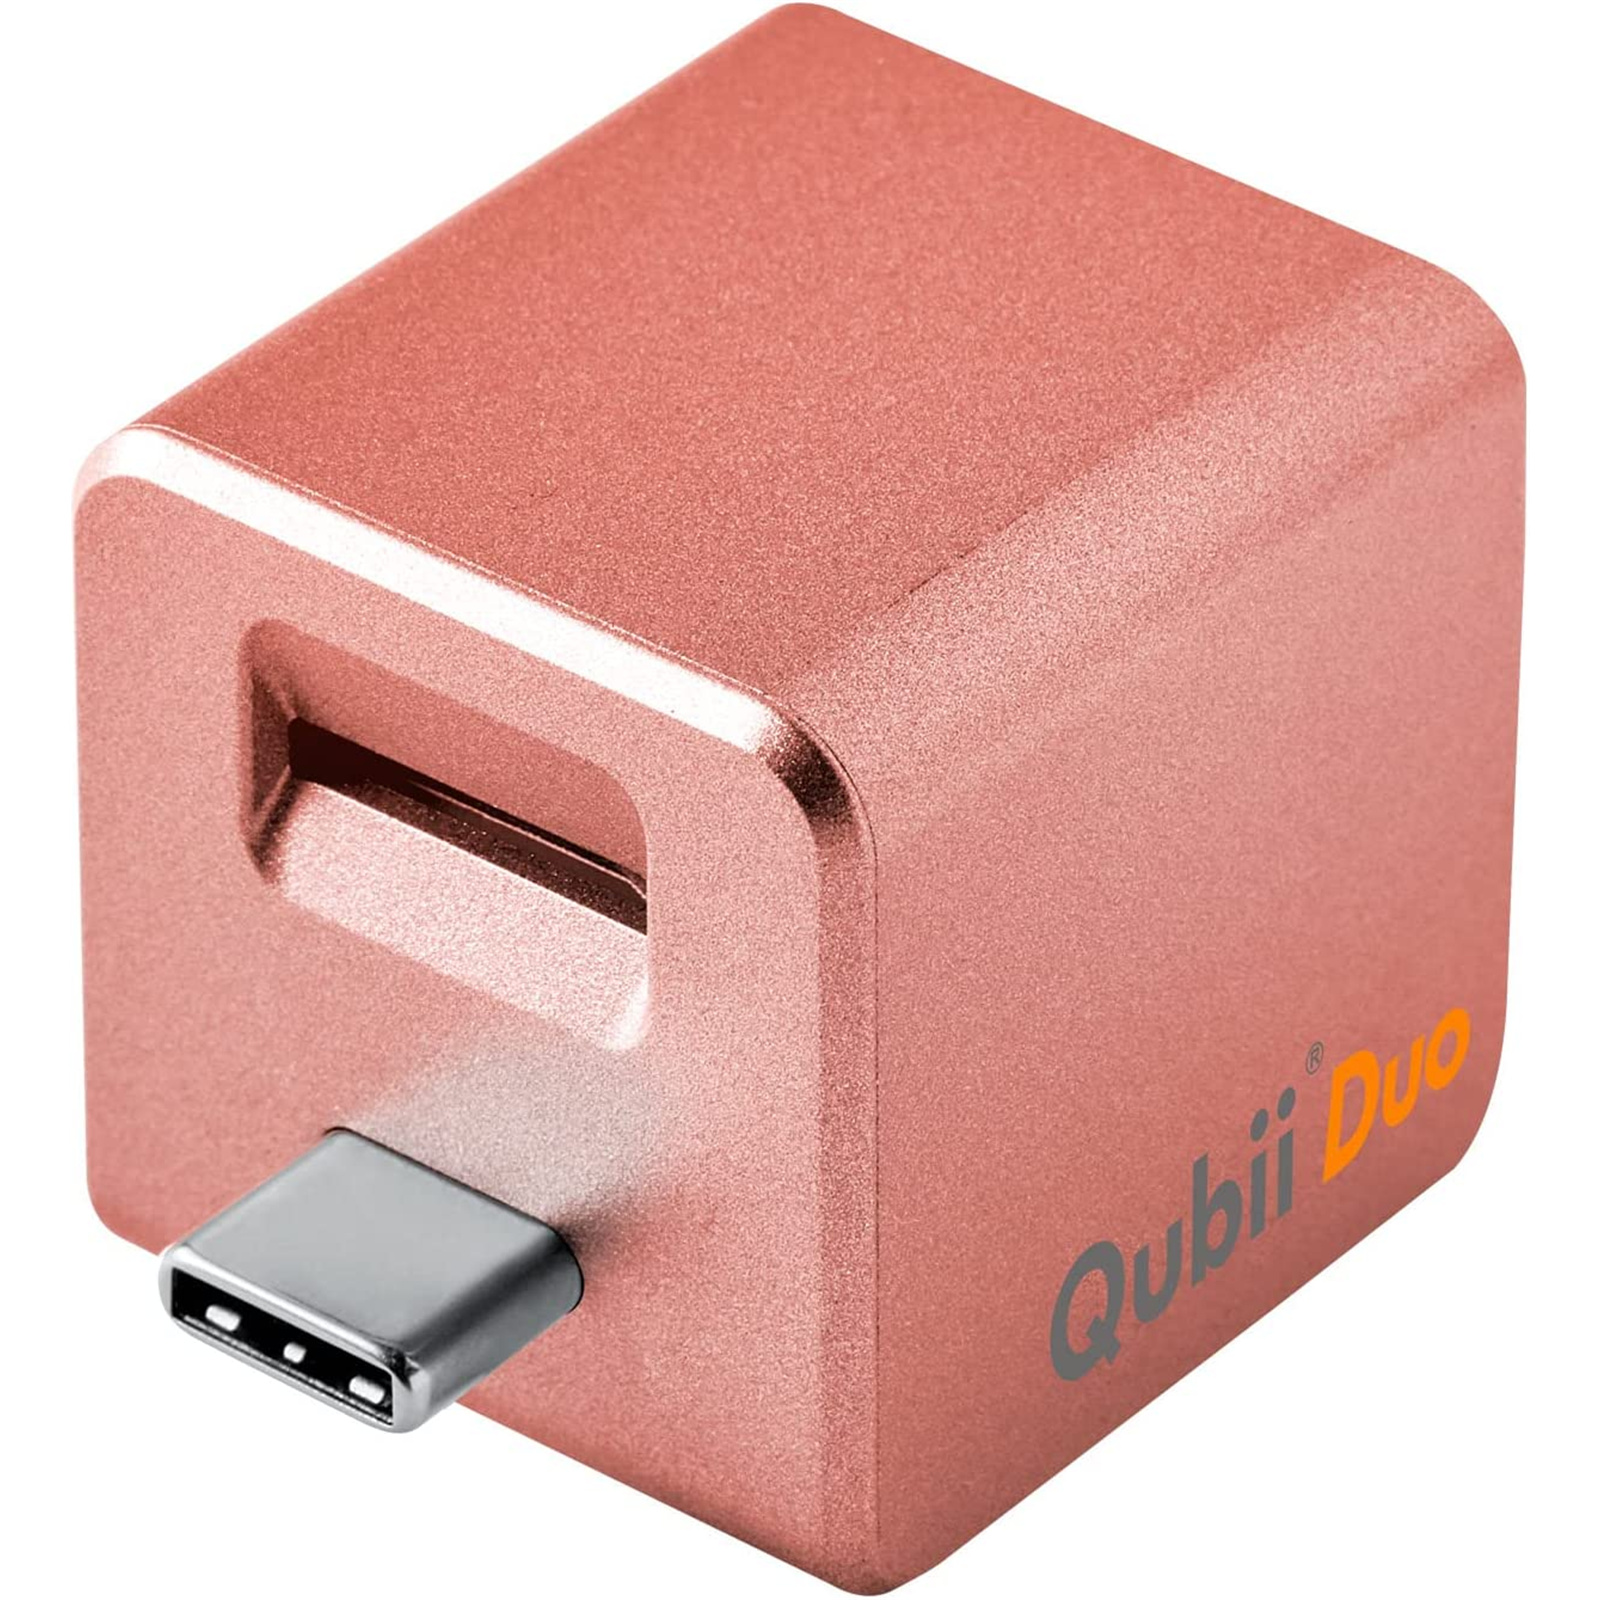 Buy the Maktar Qubii DUO USB C Auto Backup While Charging, MFi